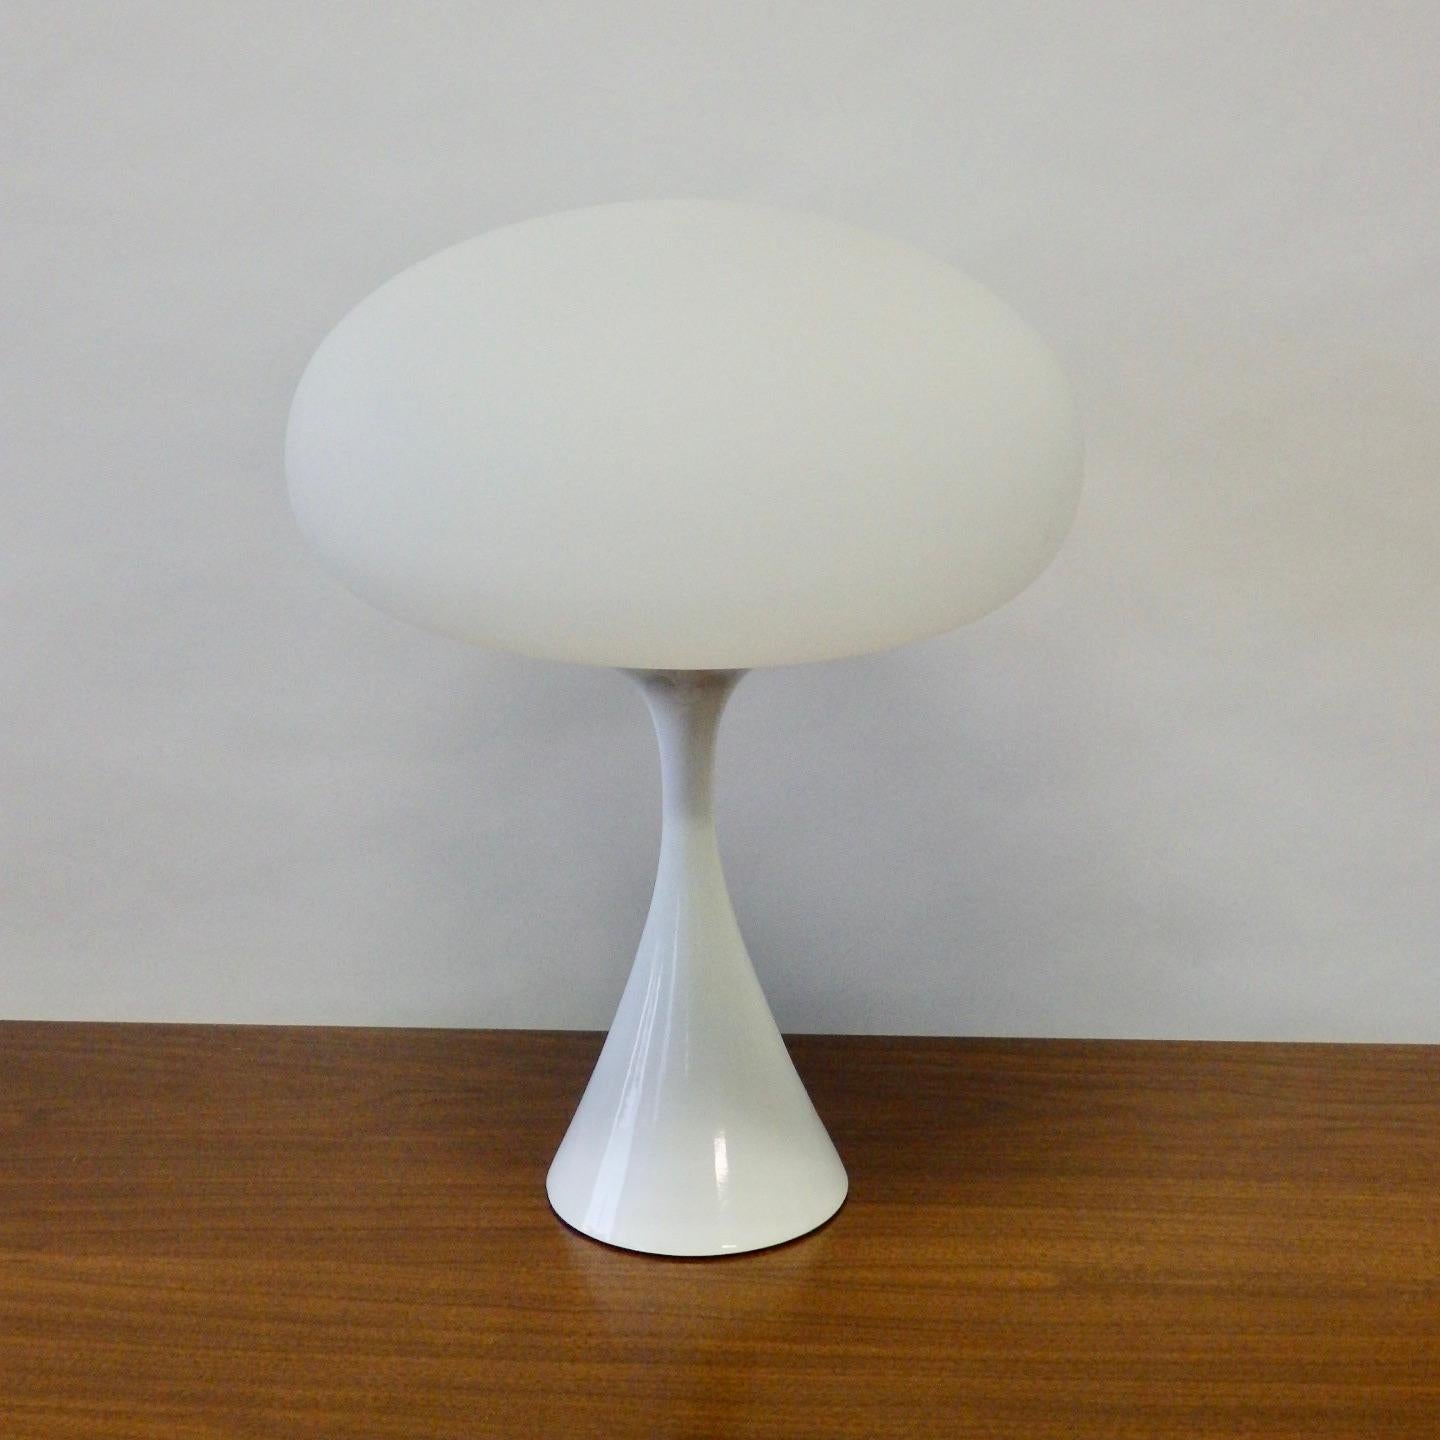 White base Laurel lamp with white mushroom globe. Retains original Laurel label on interior.